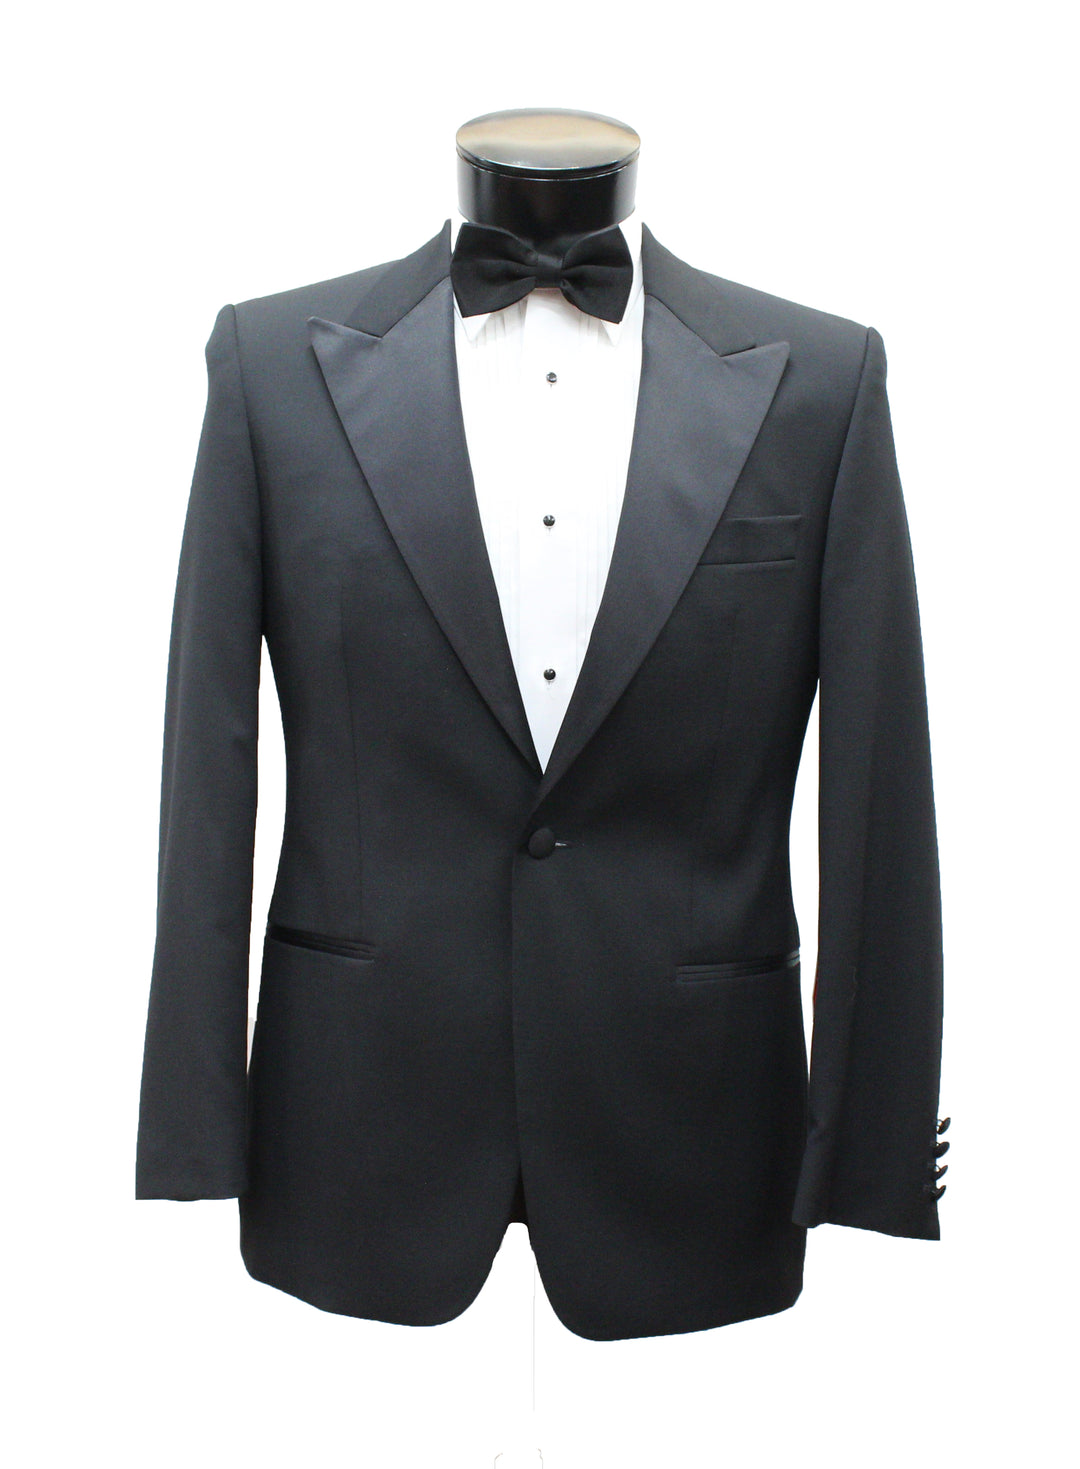 Hugo Boss Cary Grant Tuxedo – Elite Tuxedo / Elite Apparel Source